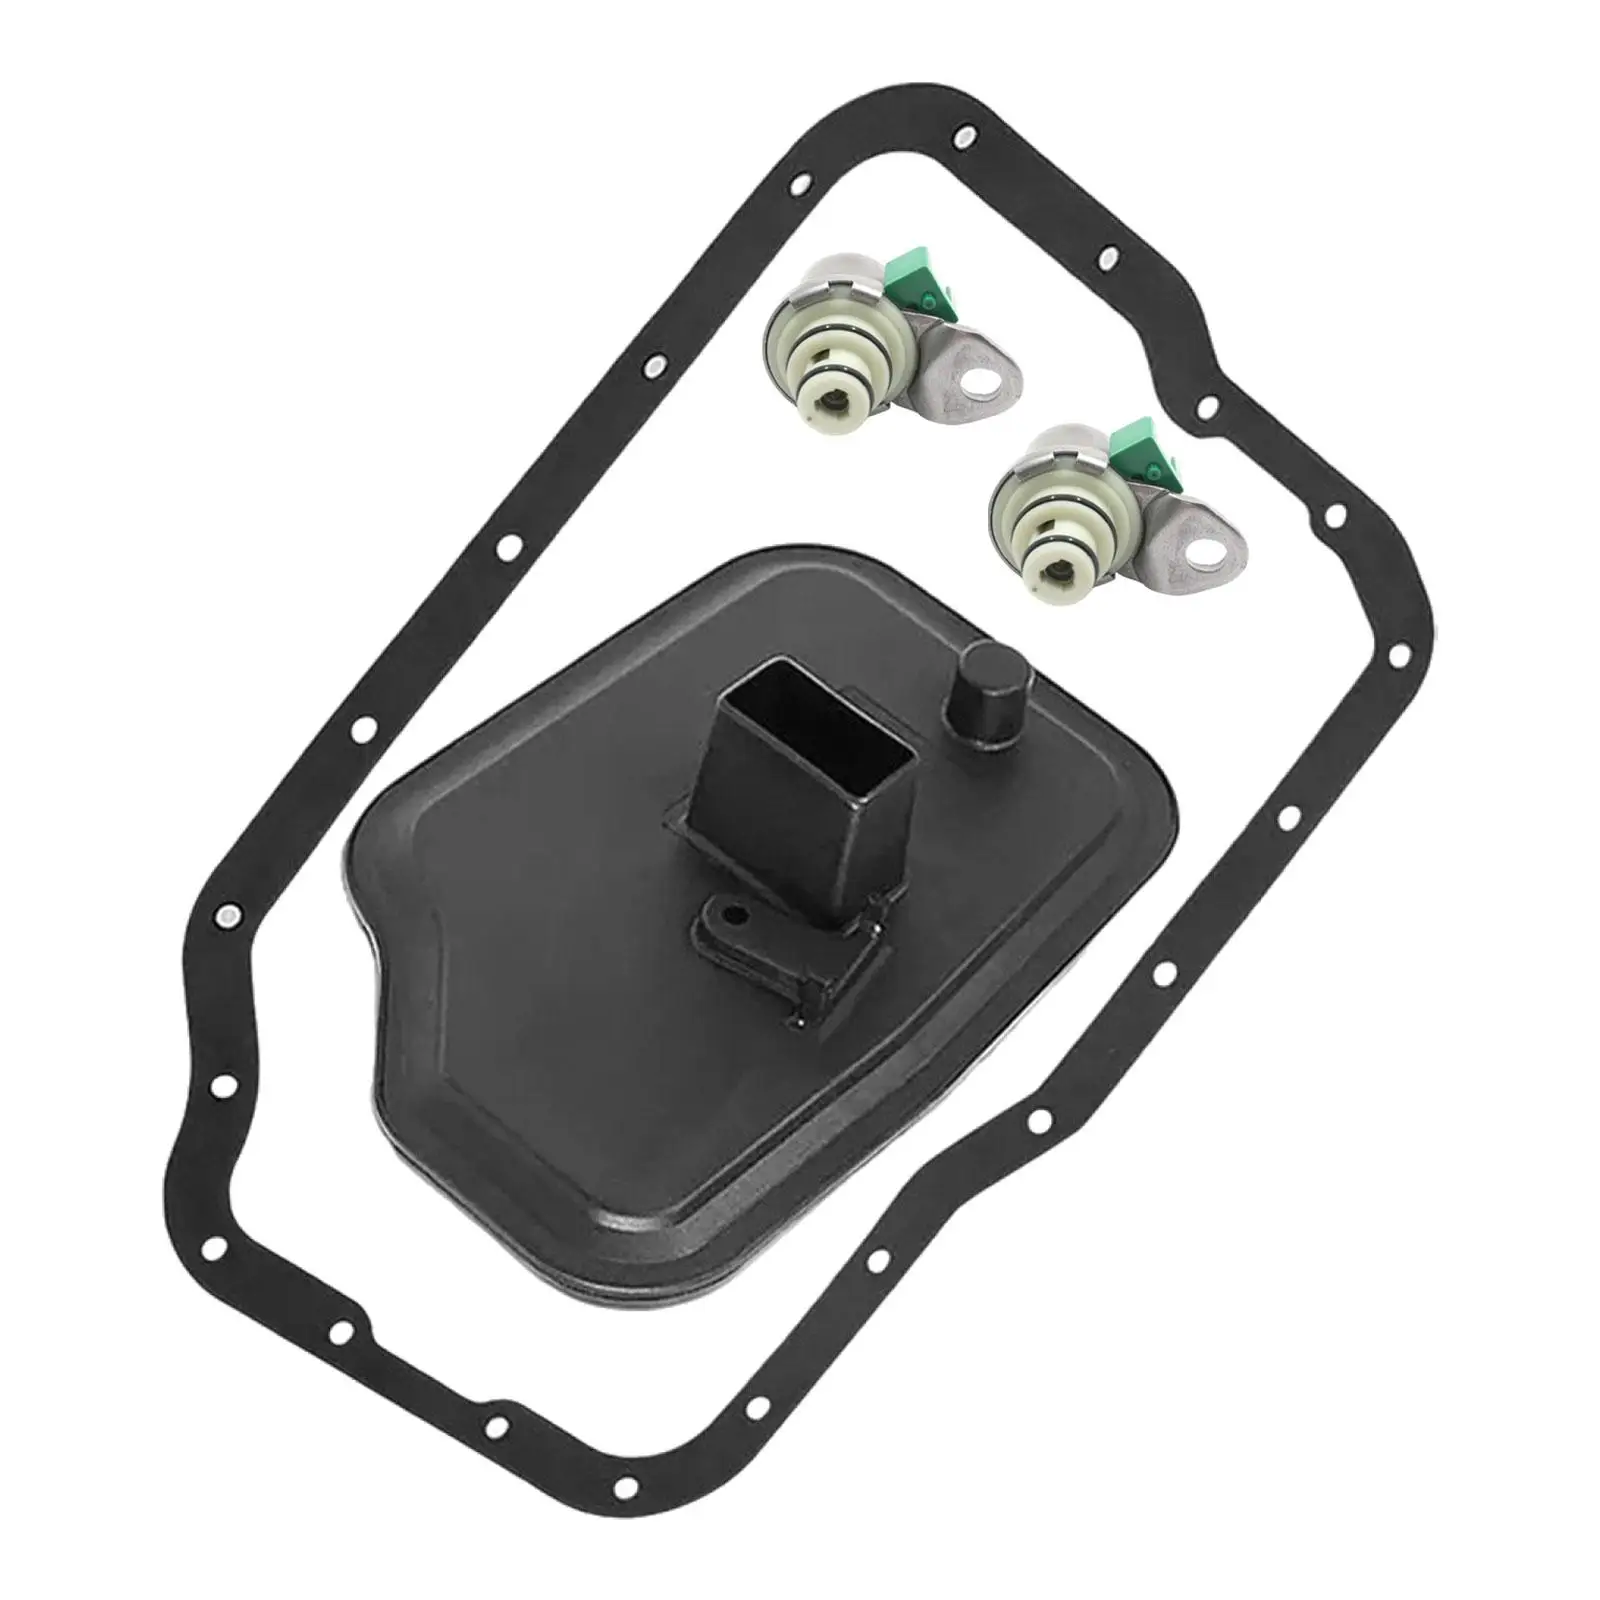 Transmission Filter Pan Gasket Kit Transmission Shift Solenoid Kit for Ford Mazda Replaces Premium Convenient Installation